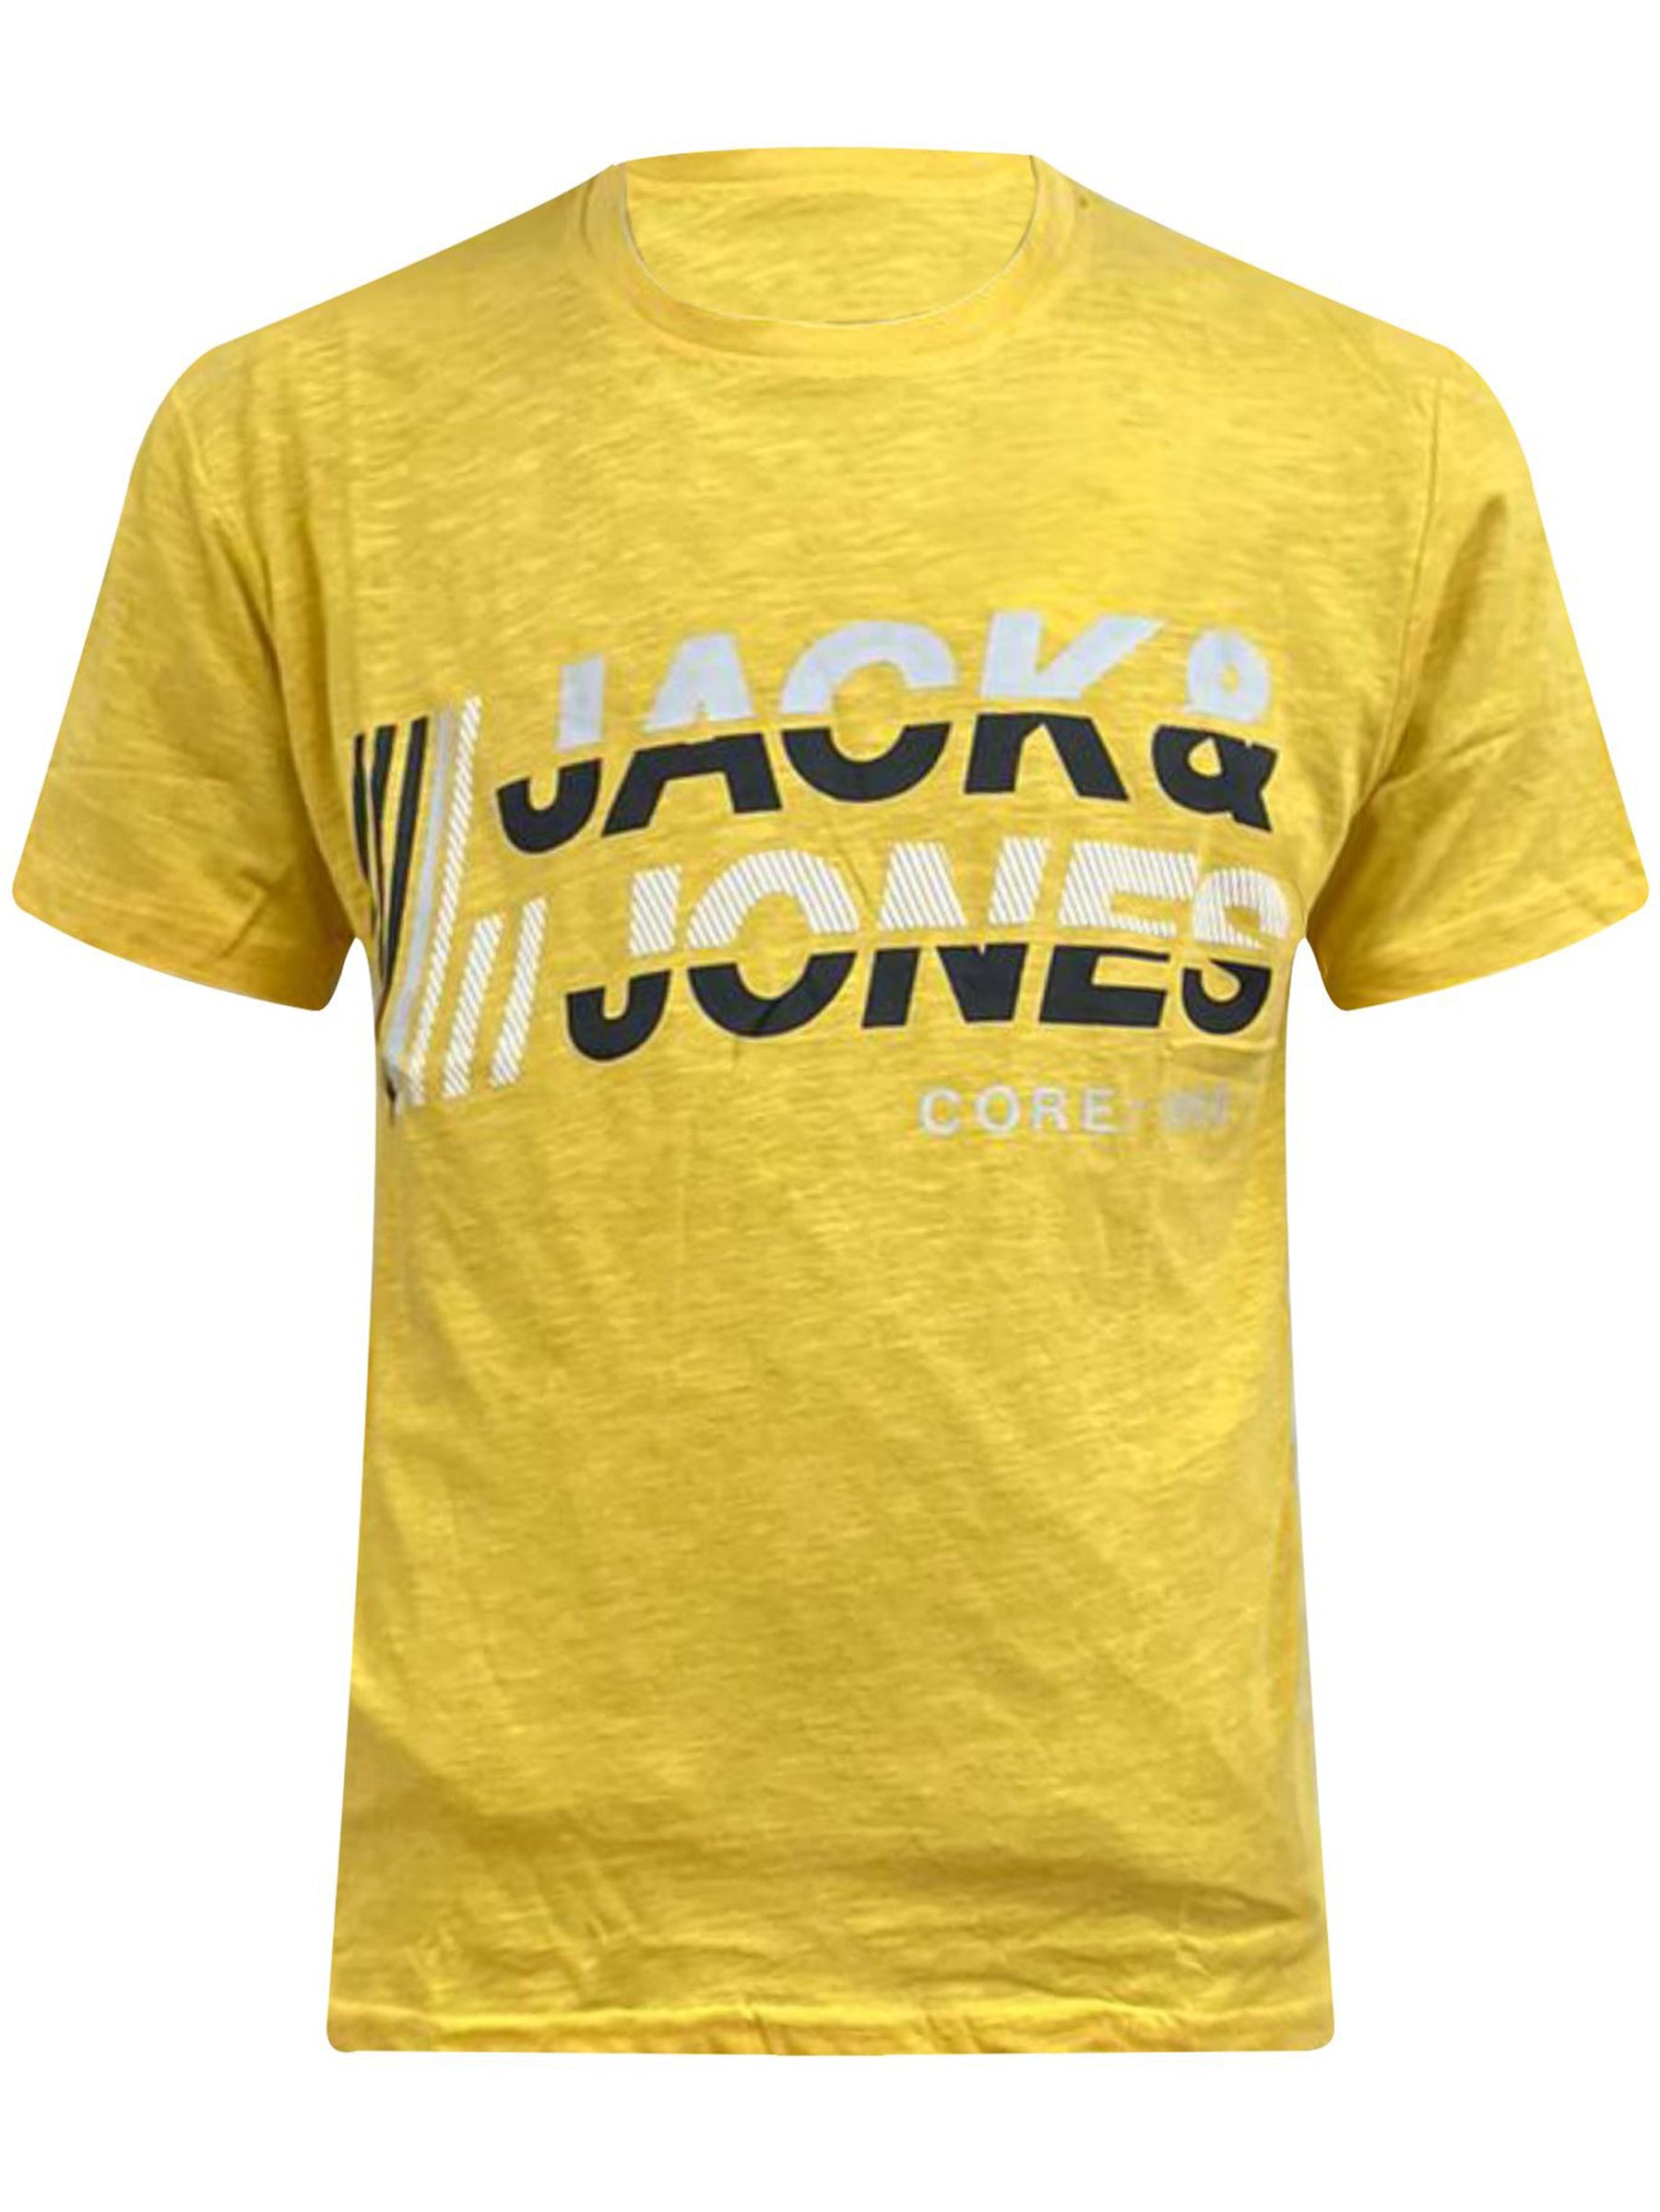 J&J TSHIRT 12188035 Mens Designer Jack & Jones Printed Logo Casual T-Shirt JACK AND JONES RAWDENIM